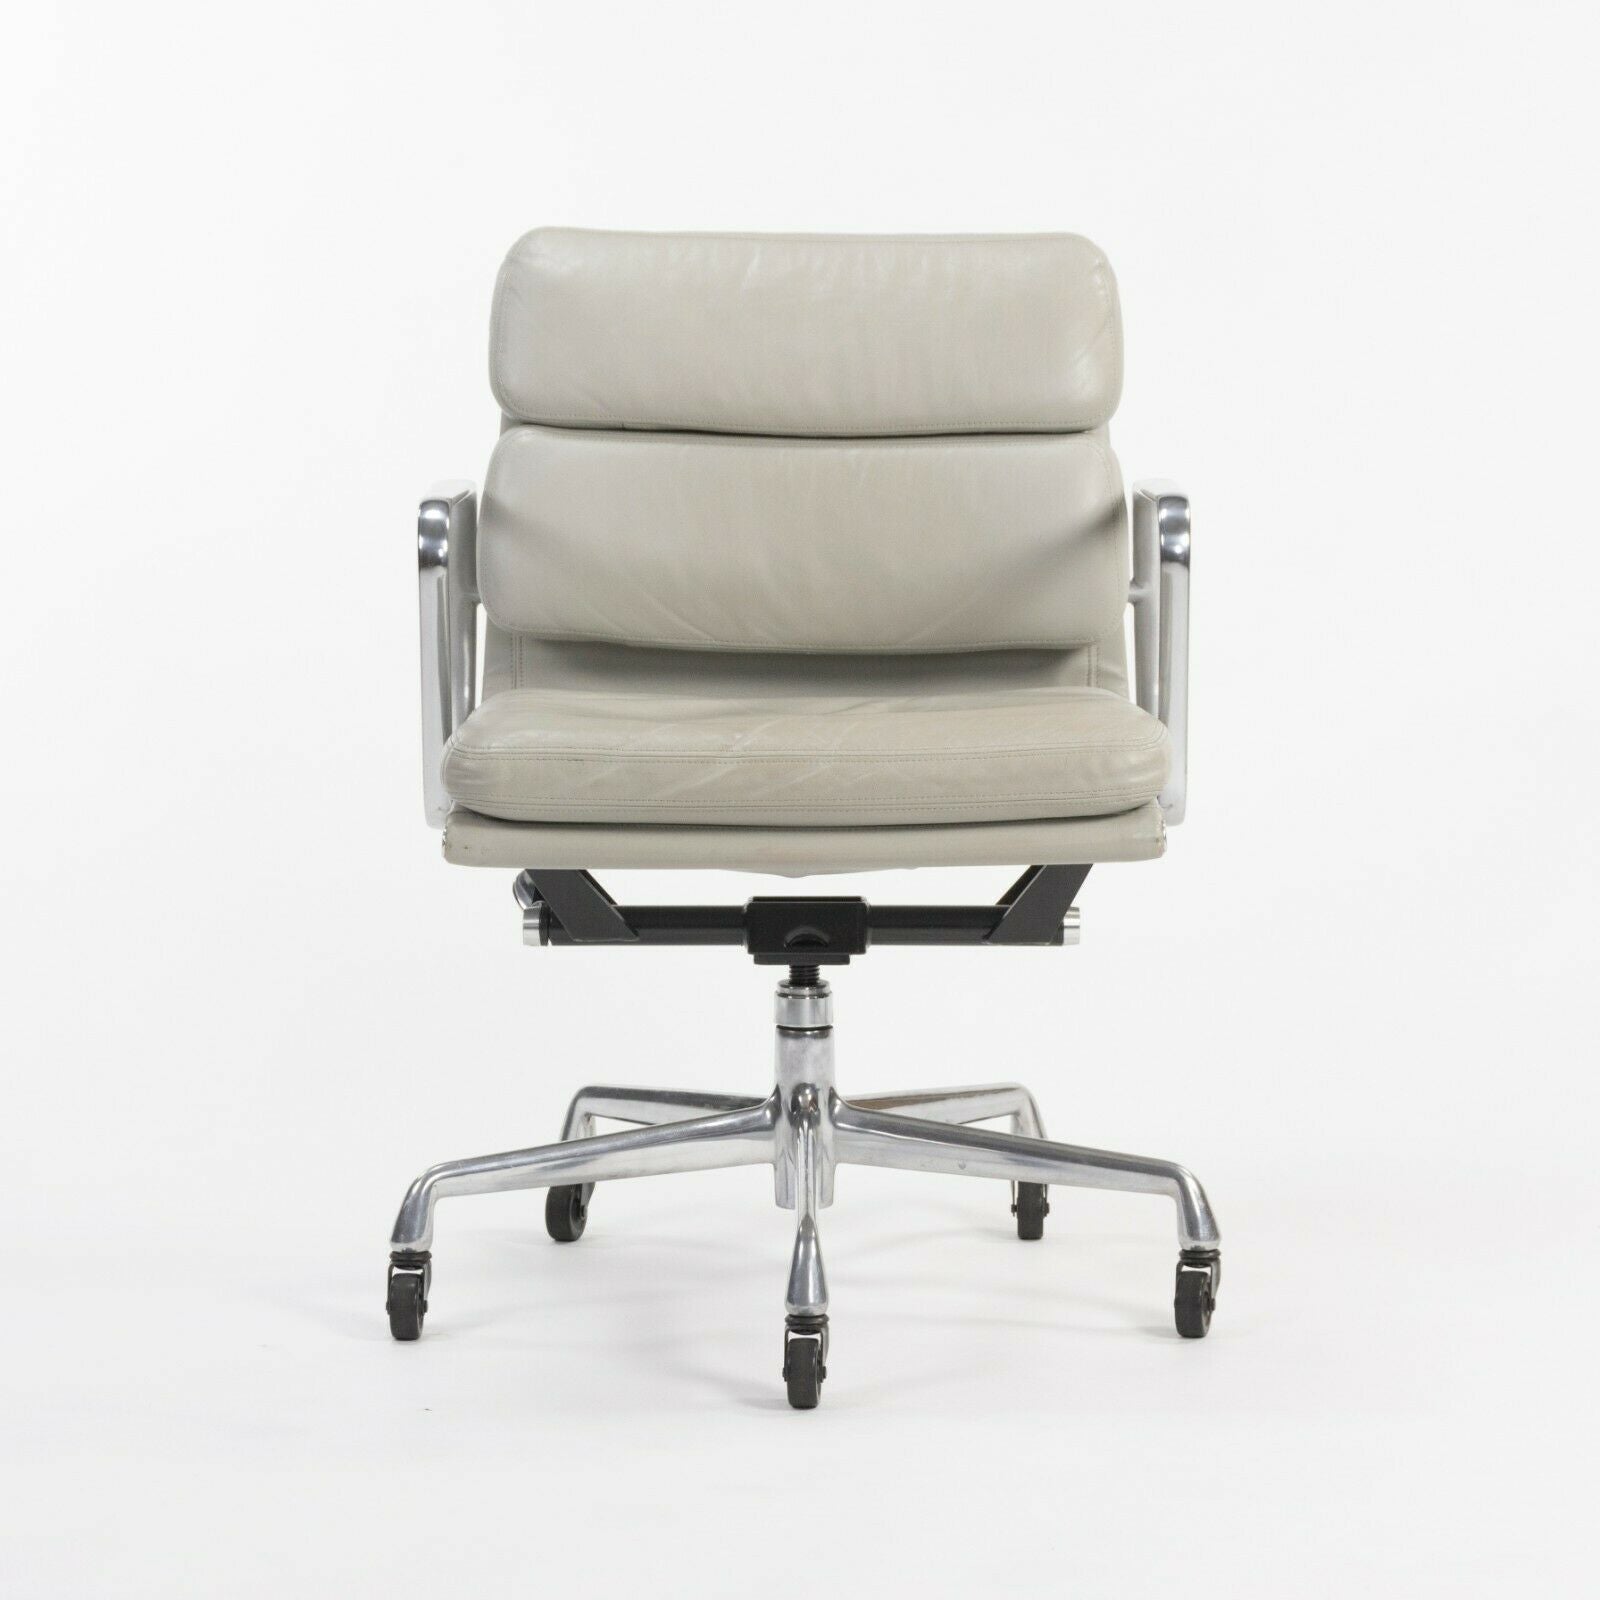 SOLD 2002 Herman Miller Eames Aluminum Group Soft Pad Management Low Desk Chair Gray